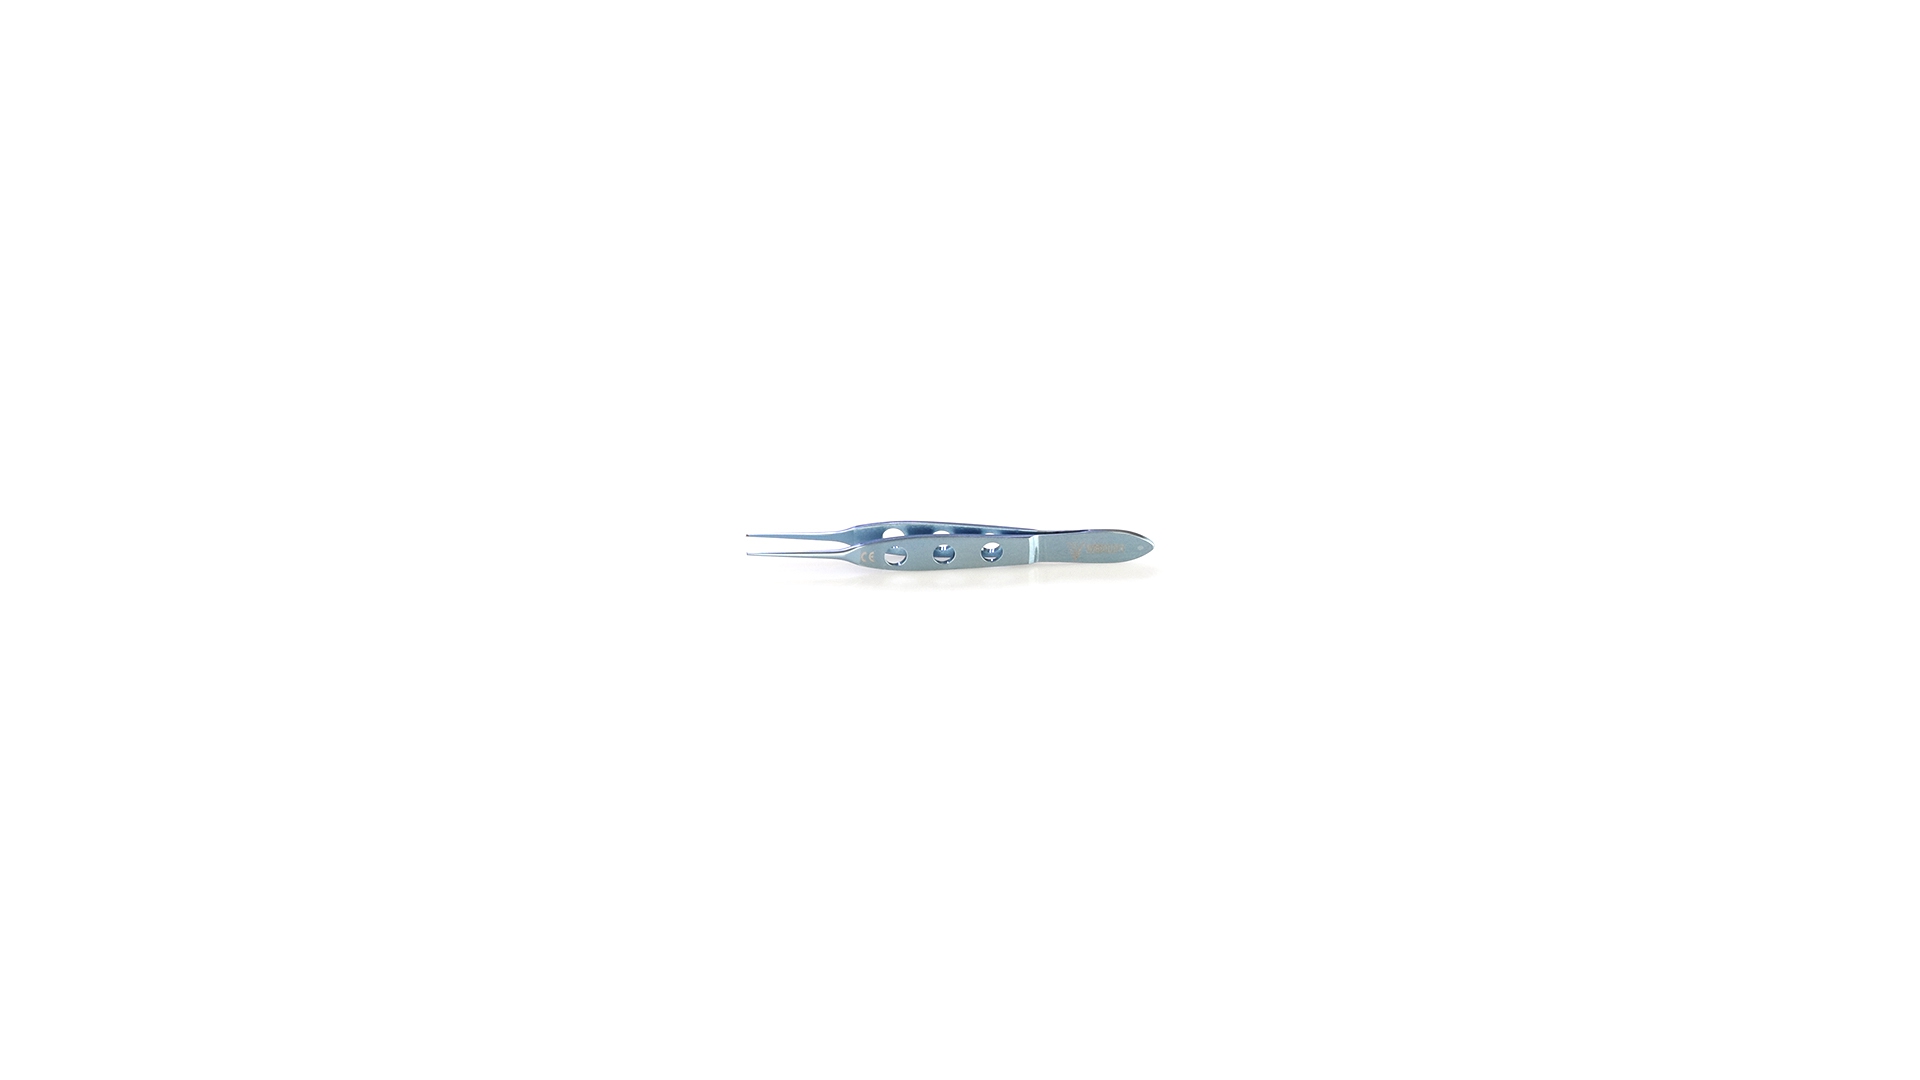 Bishop-Harmon Forceps (Delicate) - Straight TC coated tips w/0.3mm 1x2 teeth